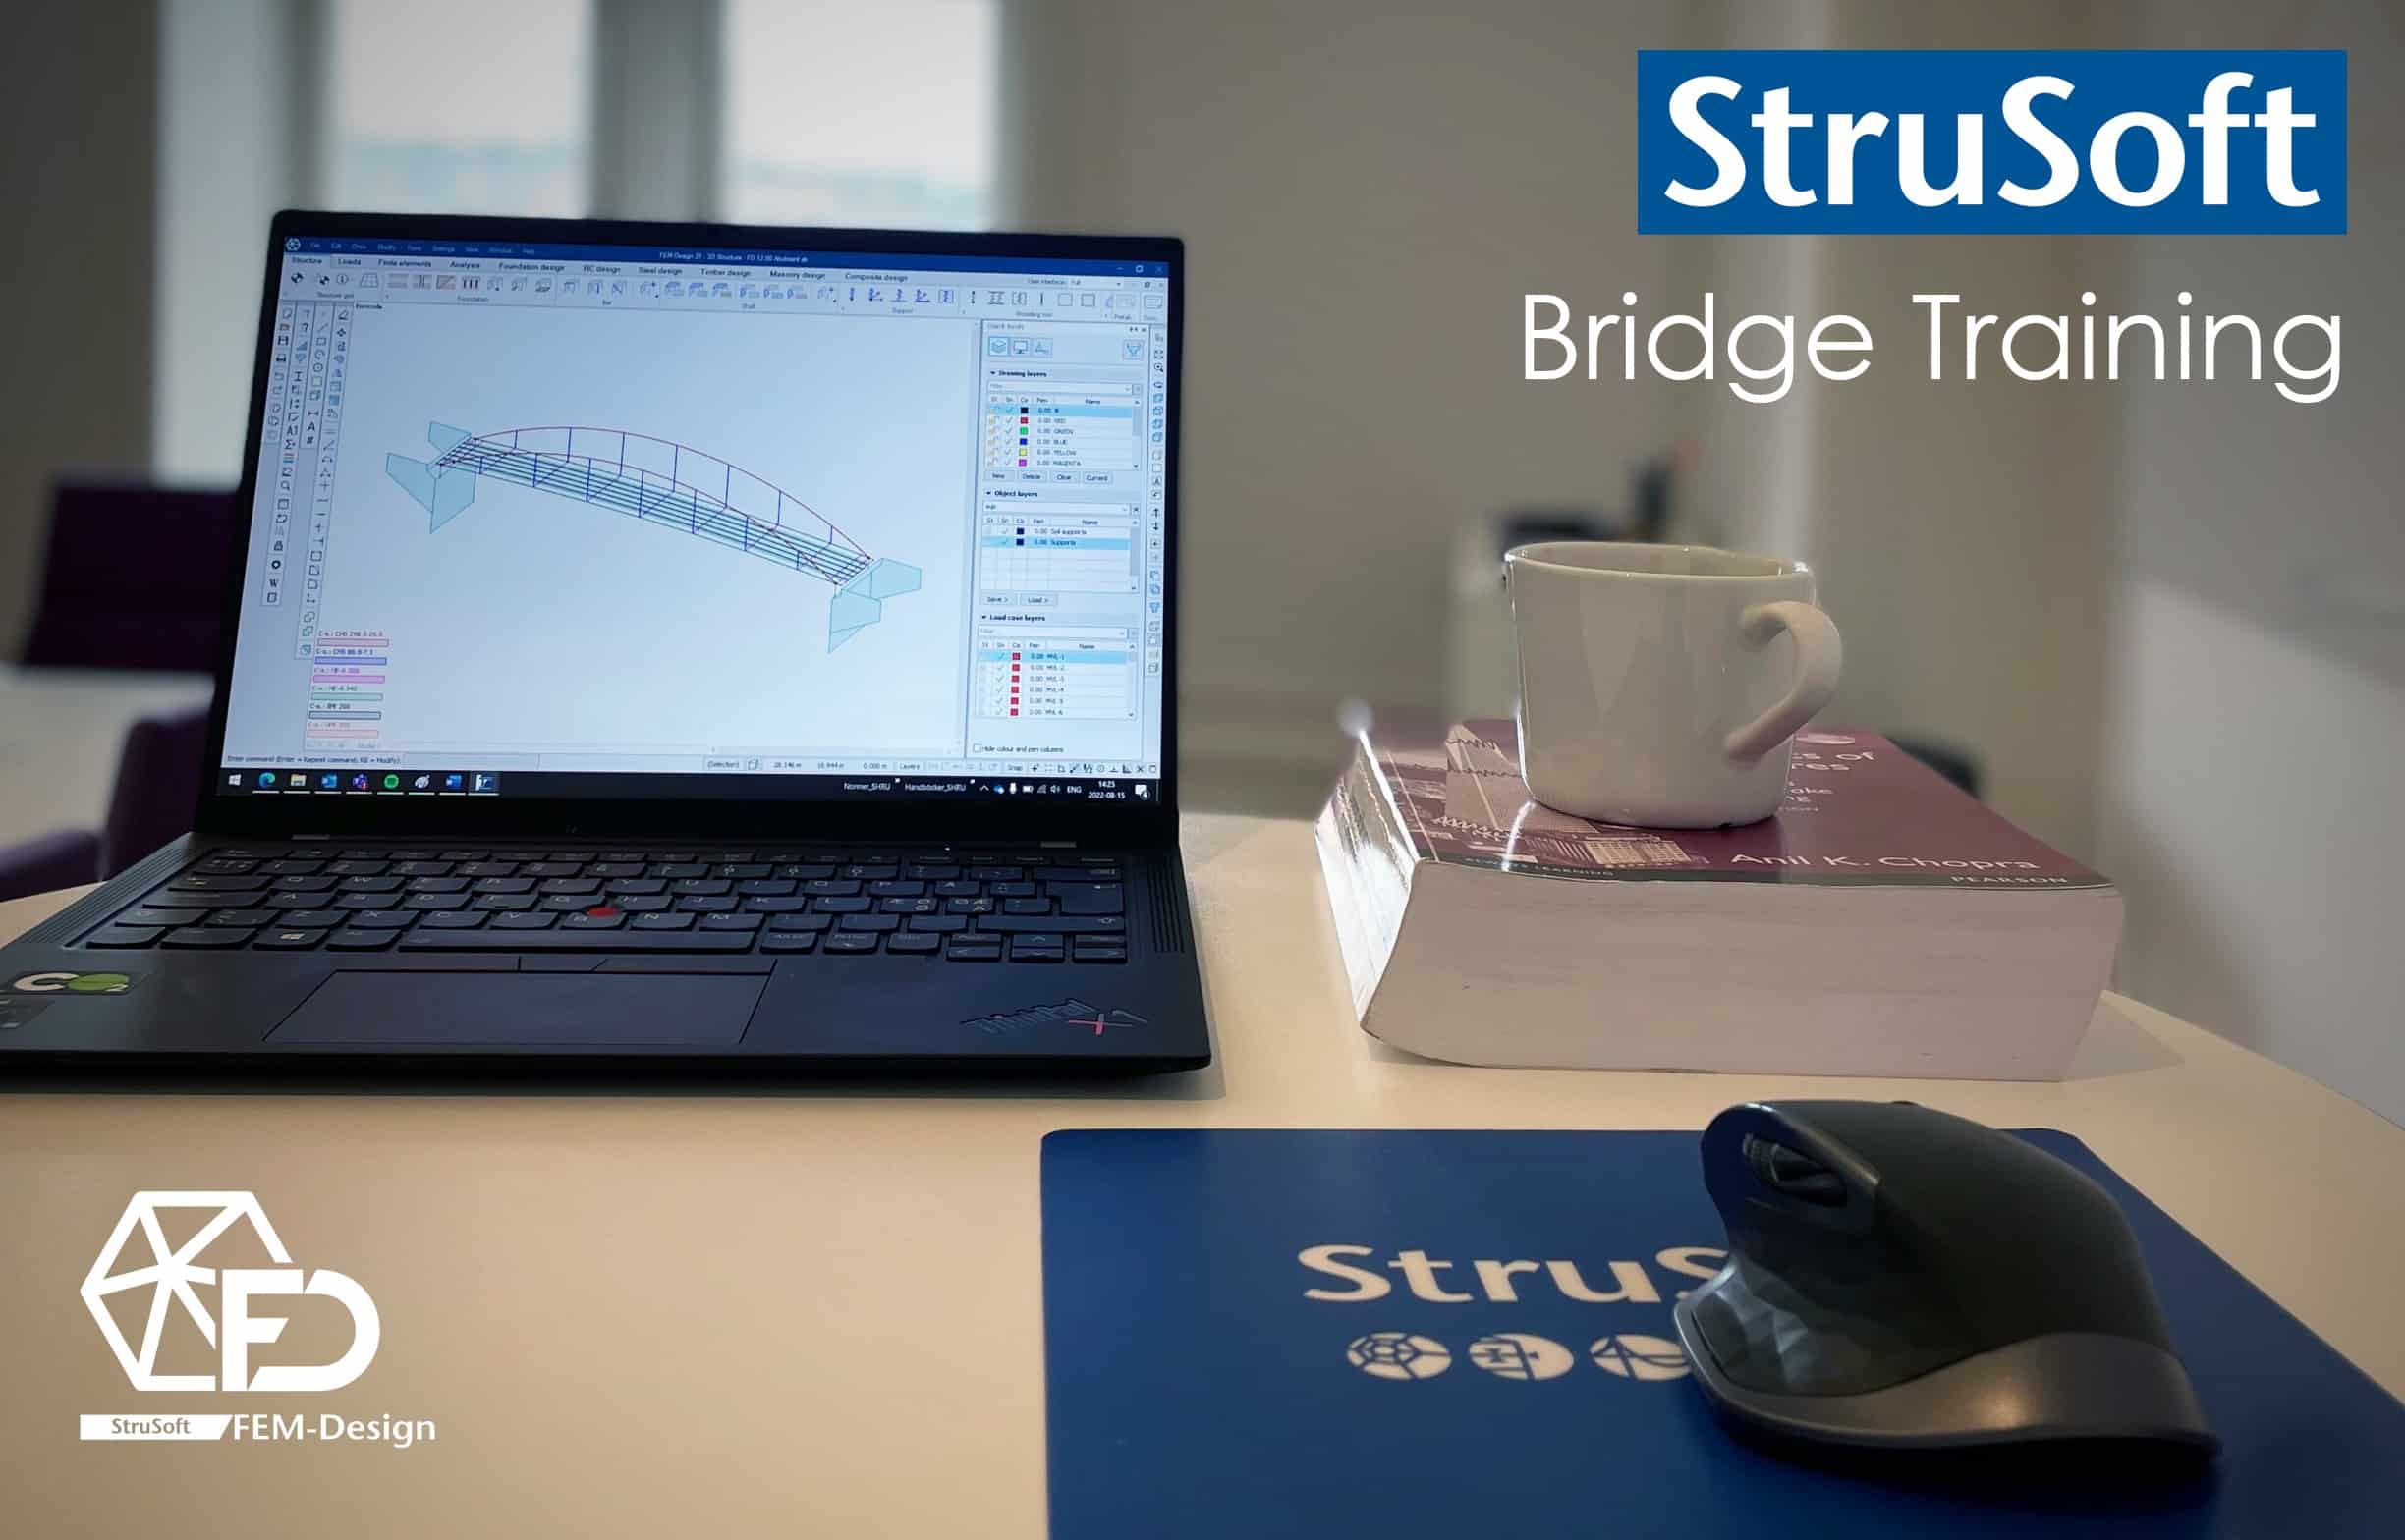 StruSoft Bridge training